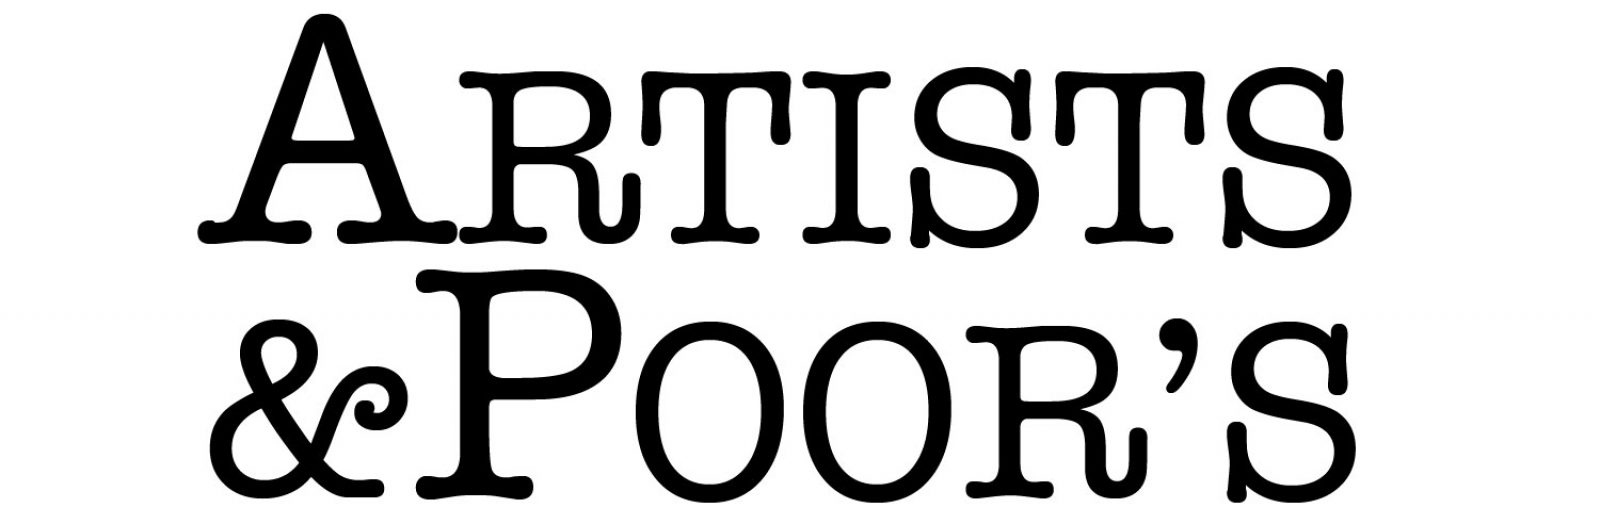 Artists & Poors